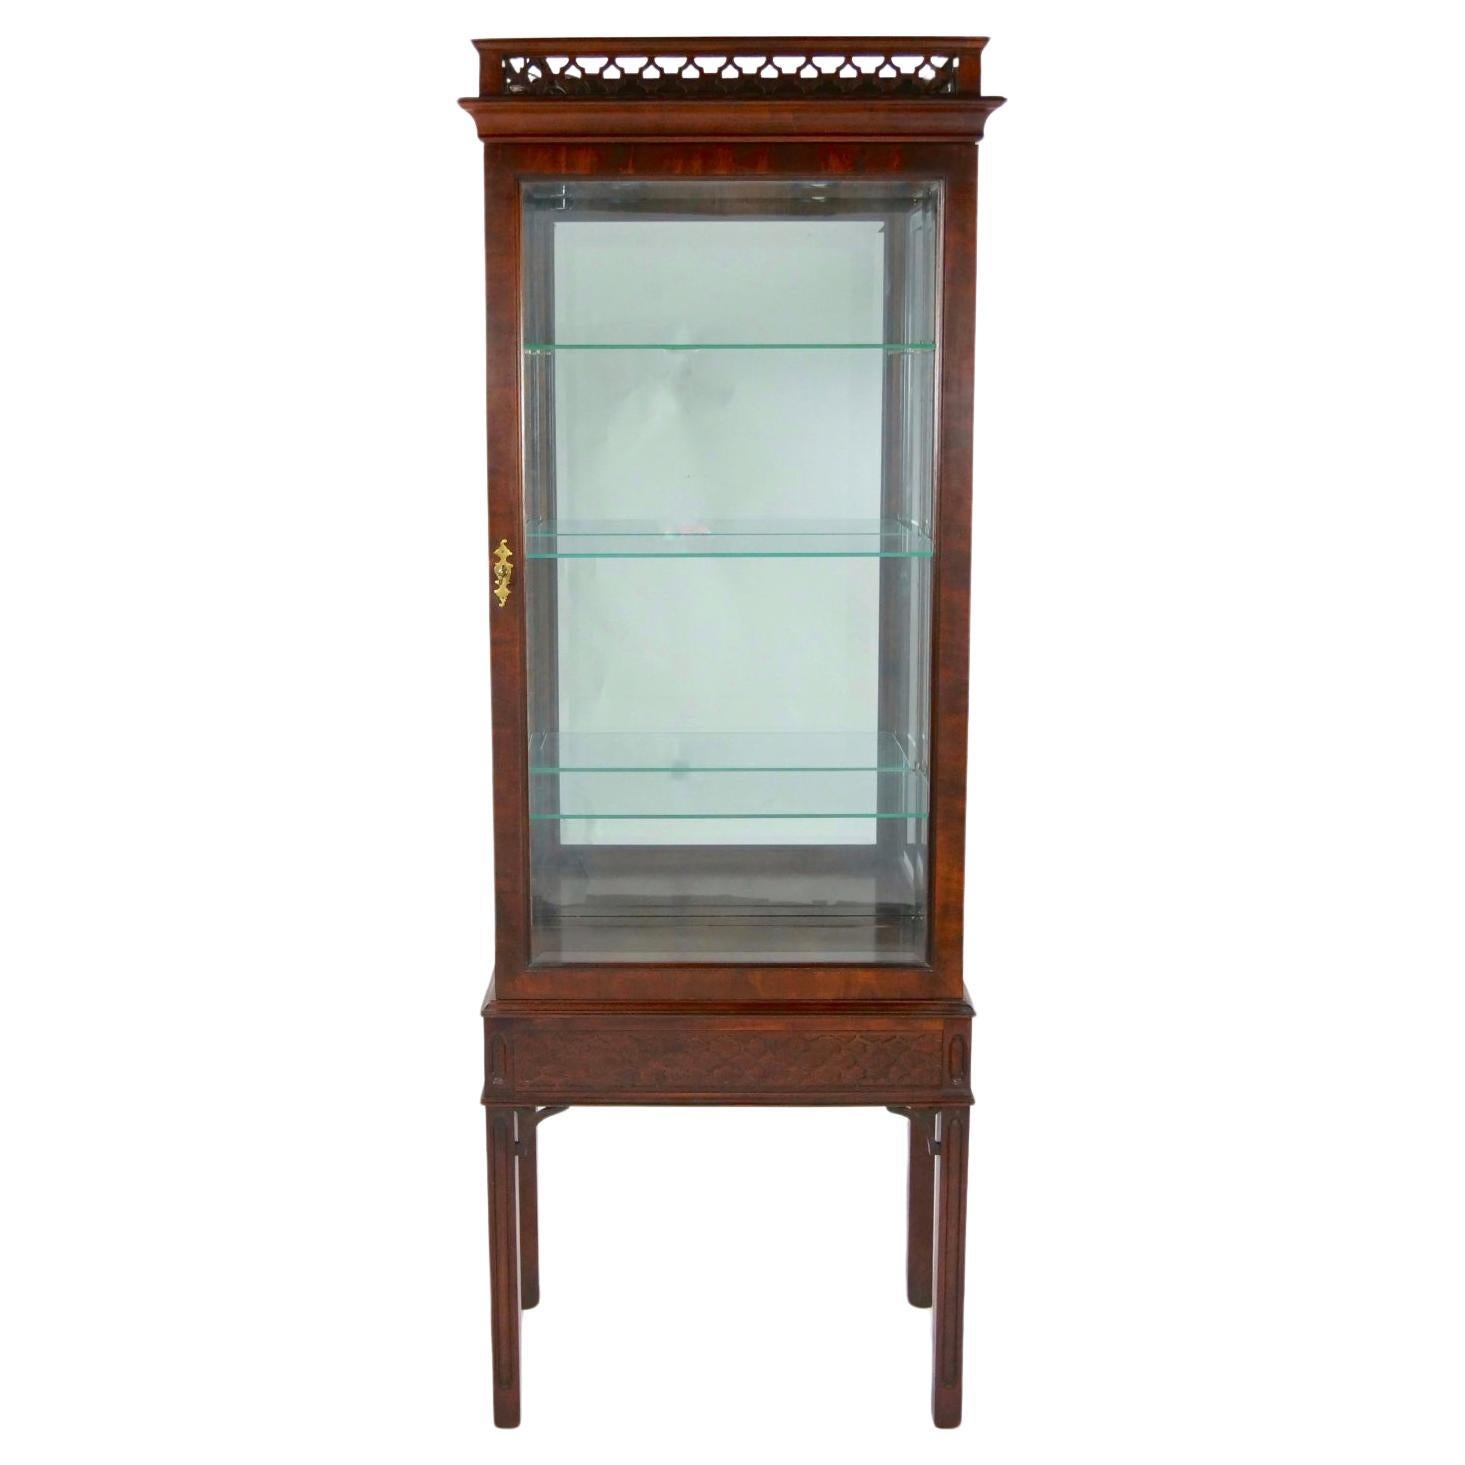 Mahogany Wood Framed Mirrored Back Display Vitrine Cabinet / Three Glass Shelves For Sale